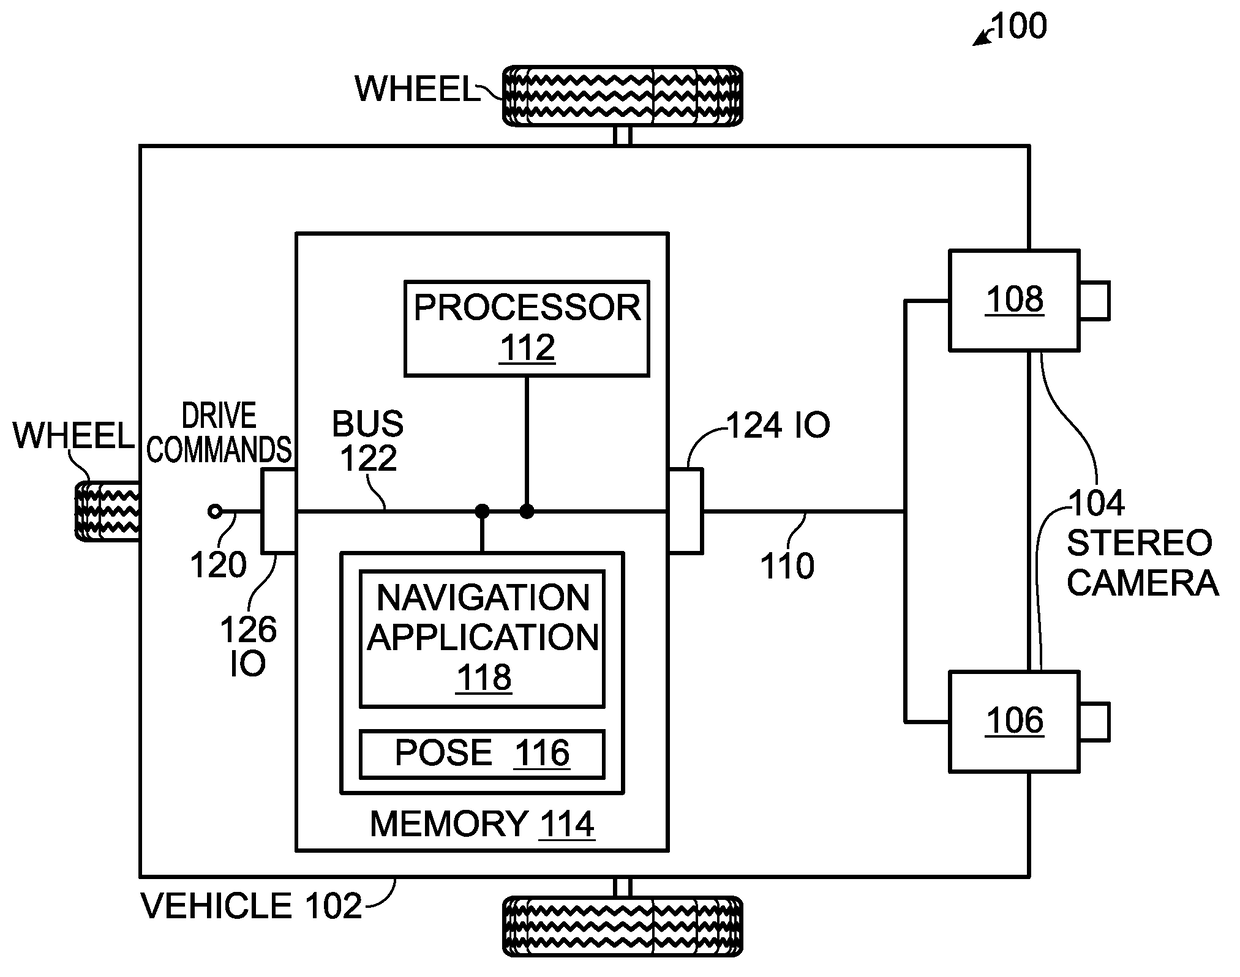 Autonomous navigation using visual odometry